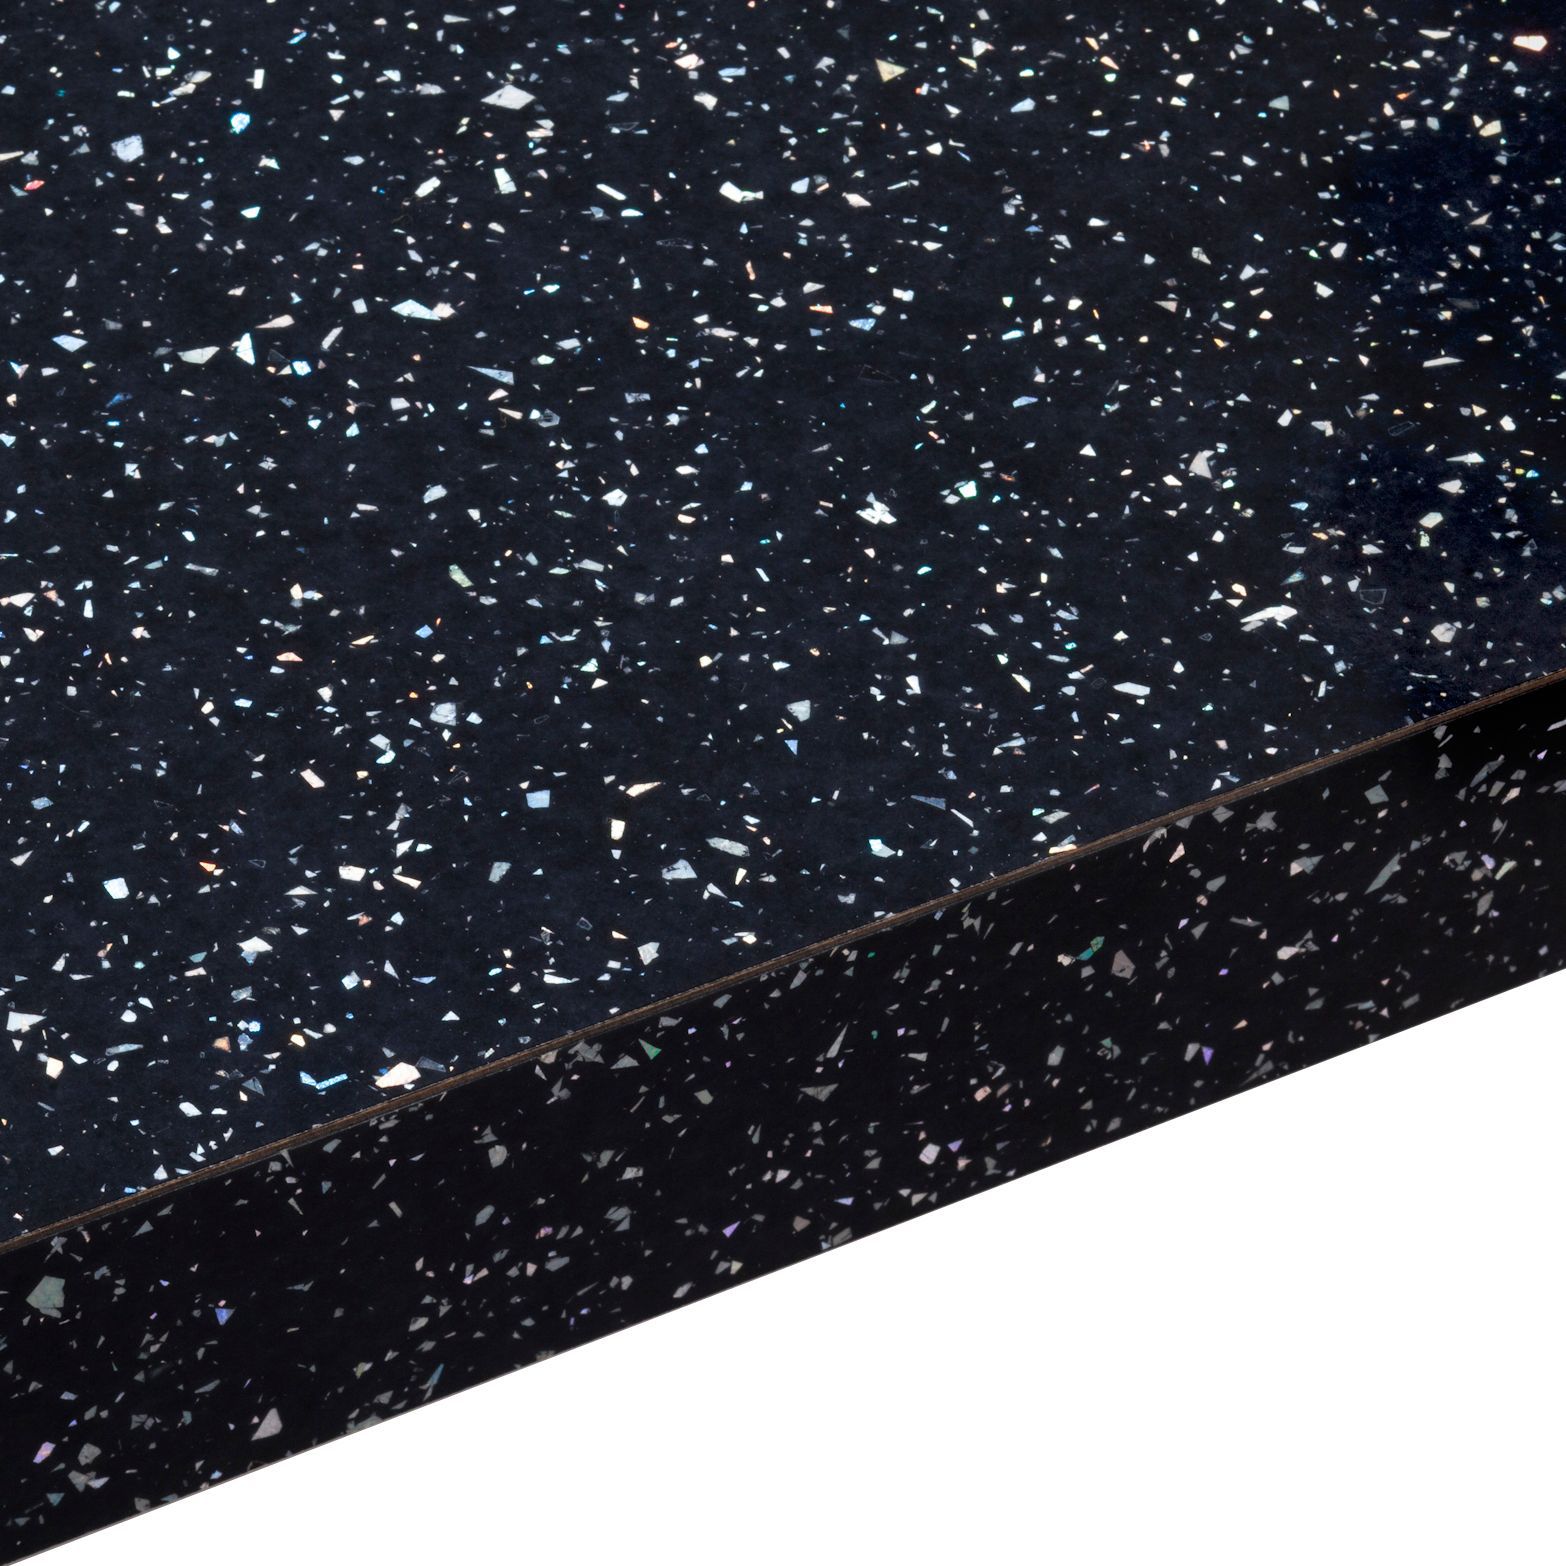 38mm Astral Gloss Black Laminate Square Edge Kitchen Worktop L 3000mm~Astral Black Worktop?$MOB PREV$&$width=768&$height=768